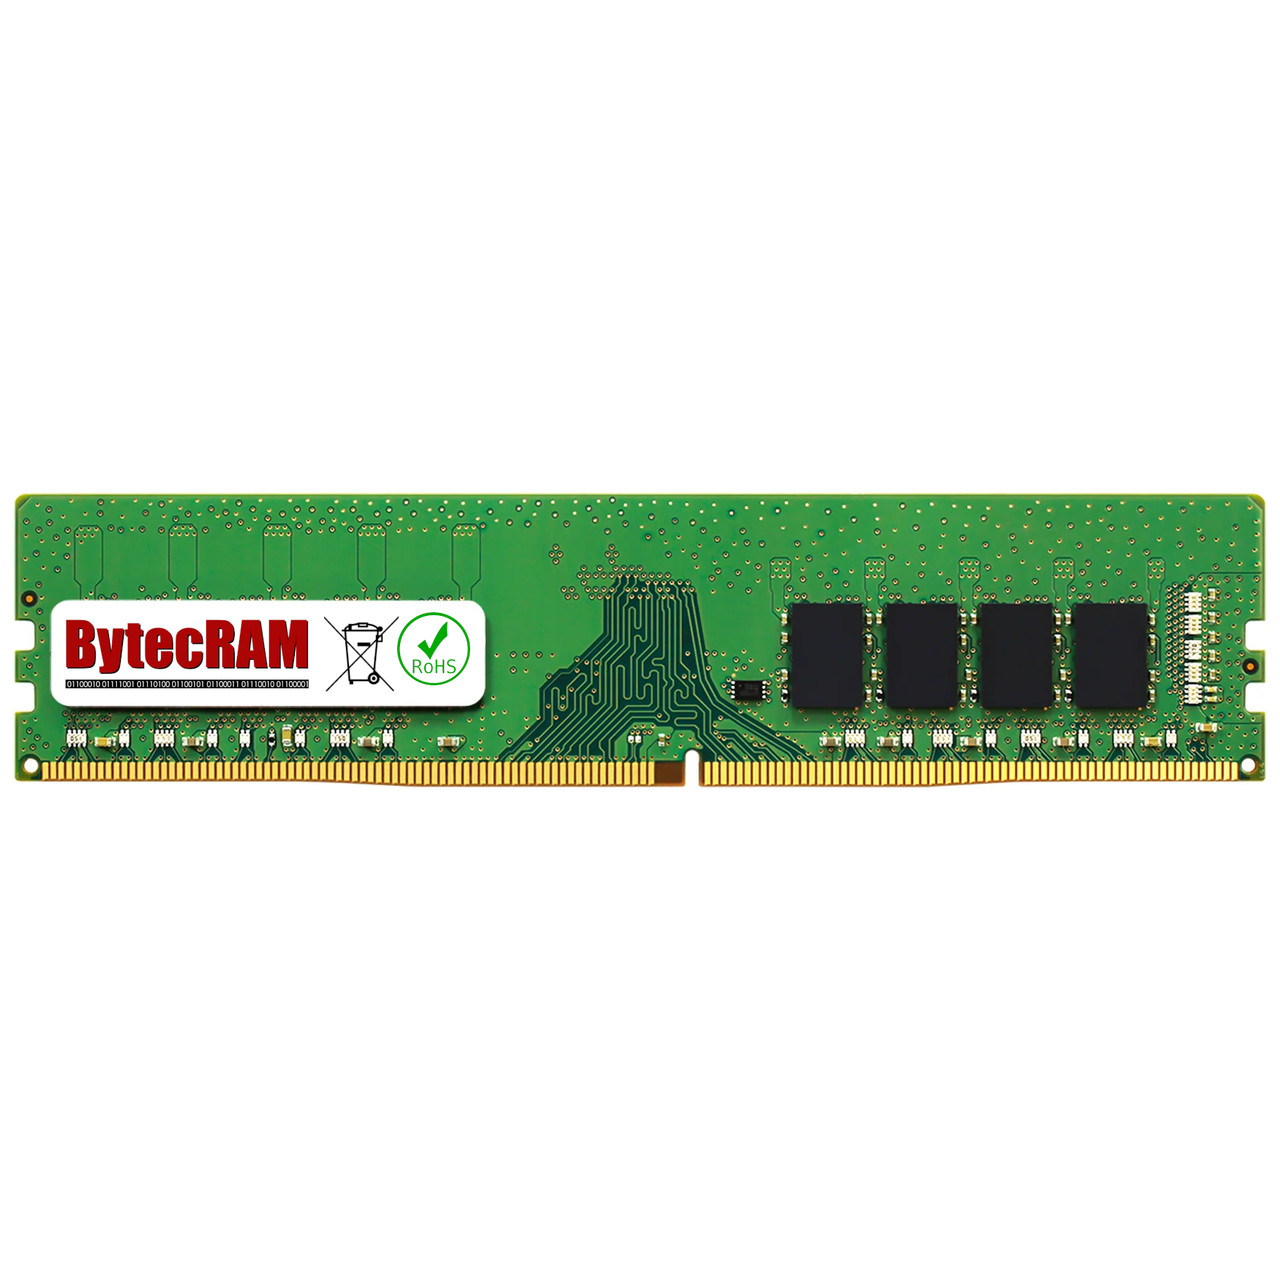 eBay*32GB Dell OptiPlex 3080 MT DDR4 3200Mhz UDIMM Memory RAM Upgrade